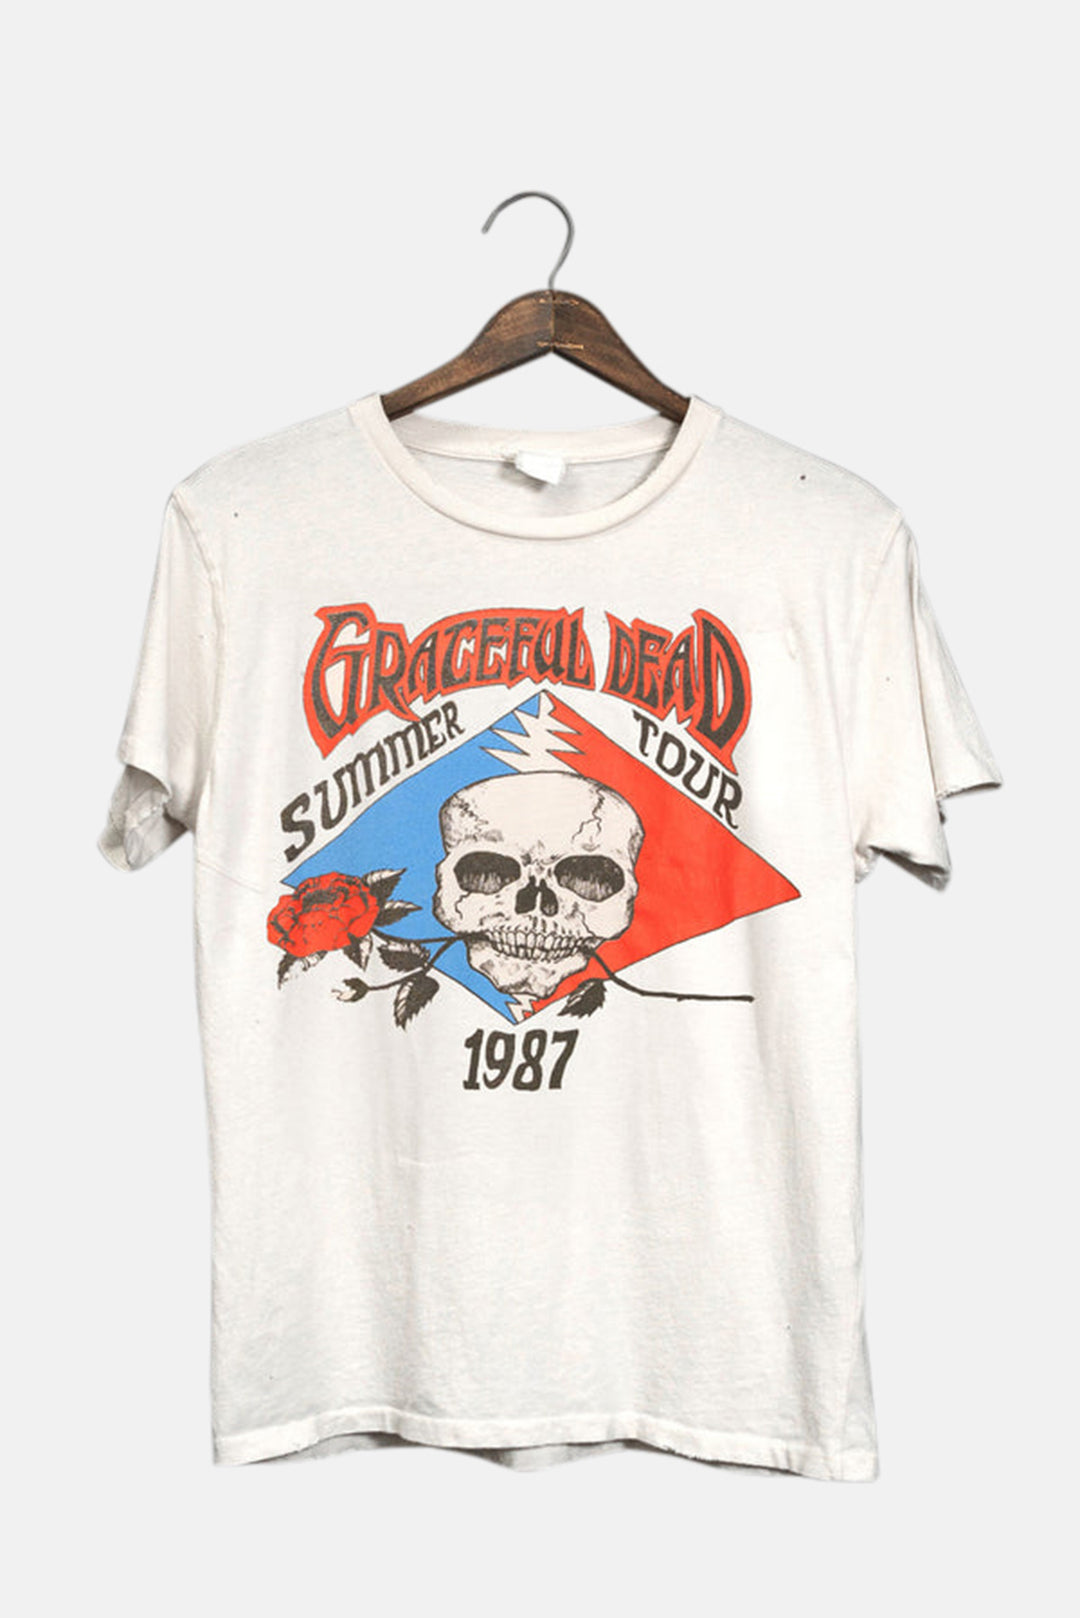 Grateful Dead Summer Tour '87 Tee Vintage White